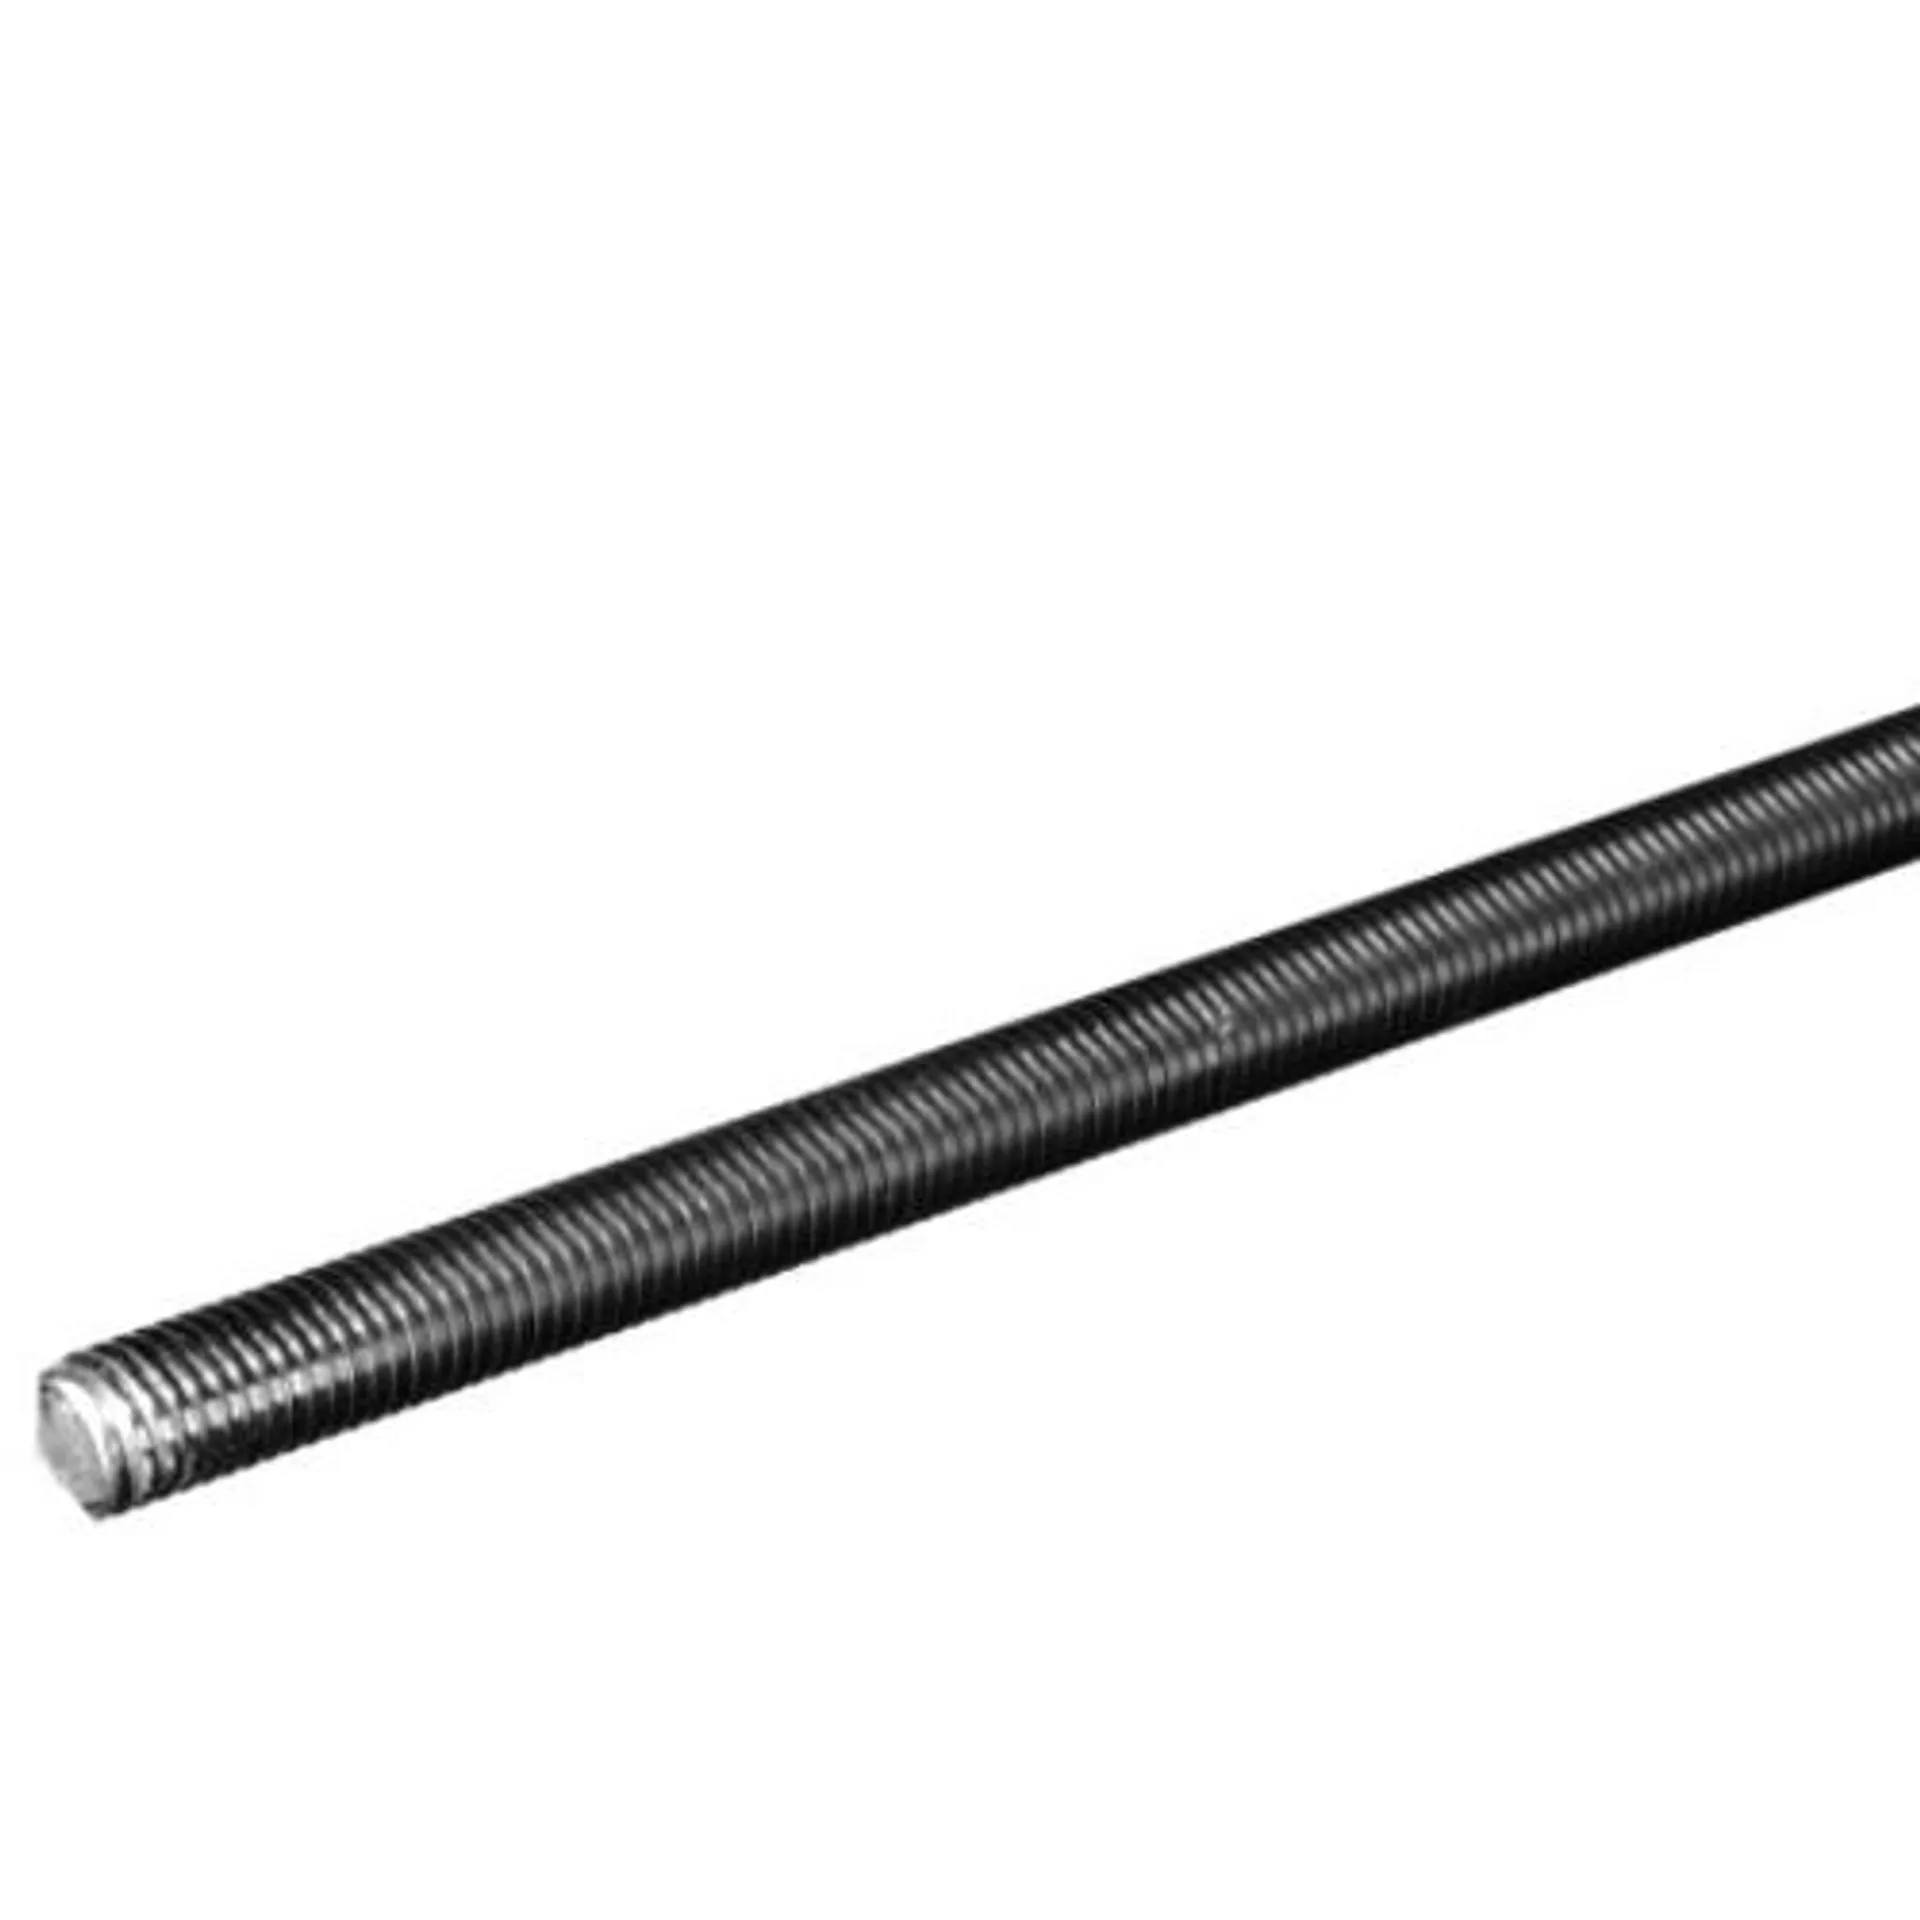 SteelWorks Stainless Steel Coarse Threaded Rod